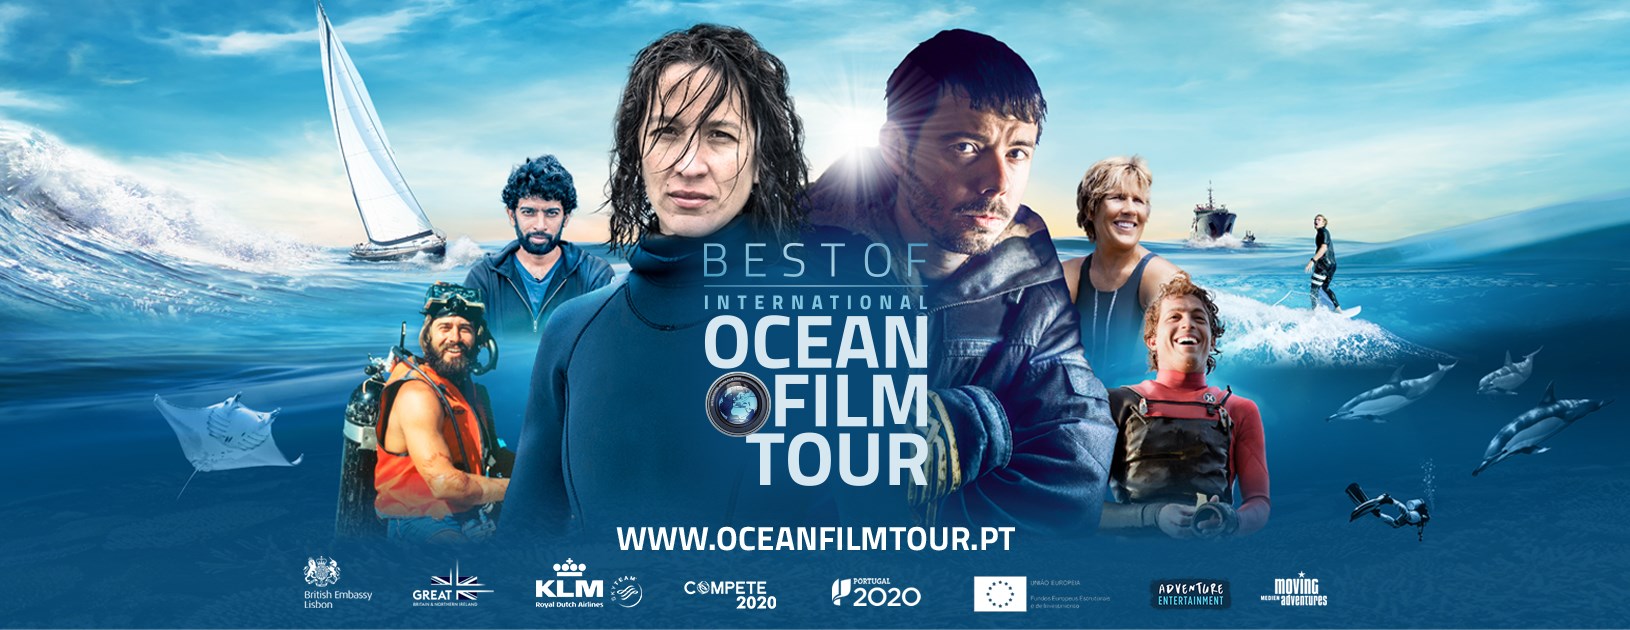 International Ocean Film Tour Best of - Figueira da Foz